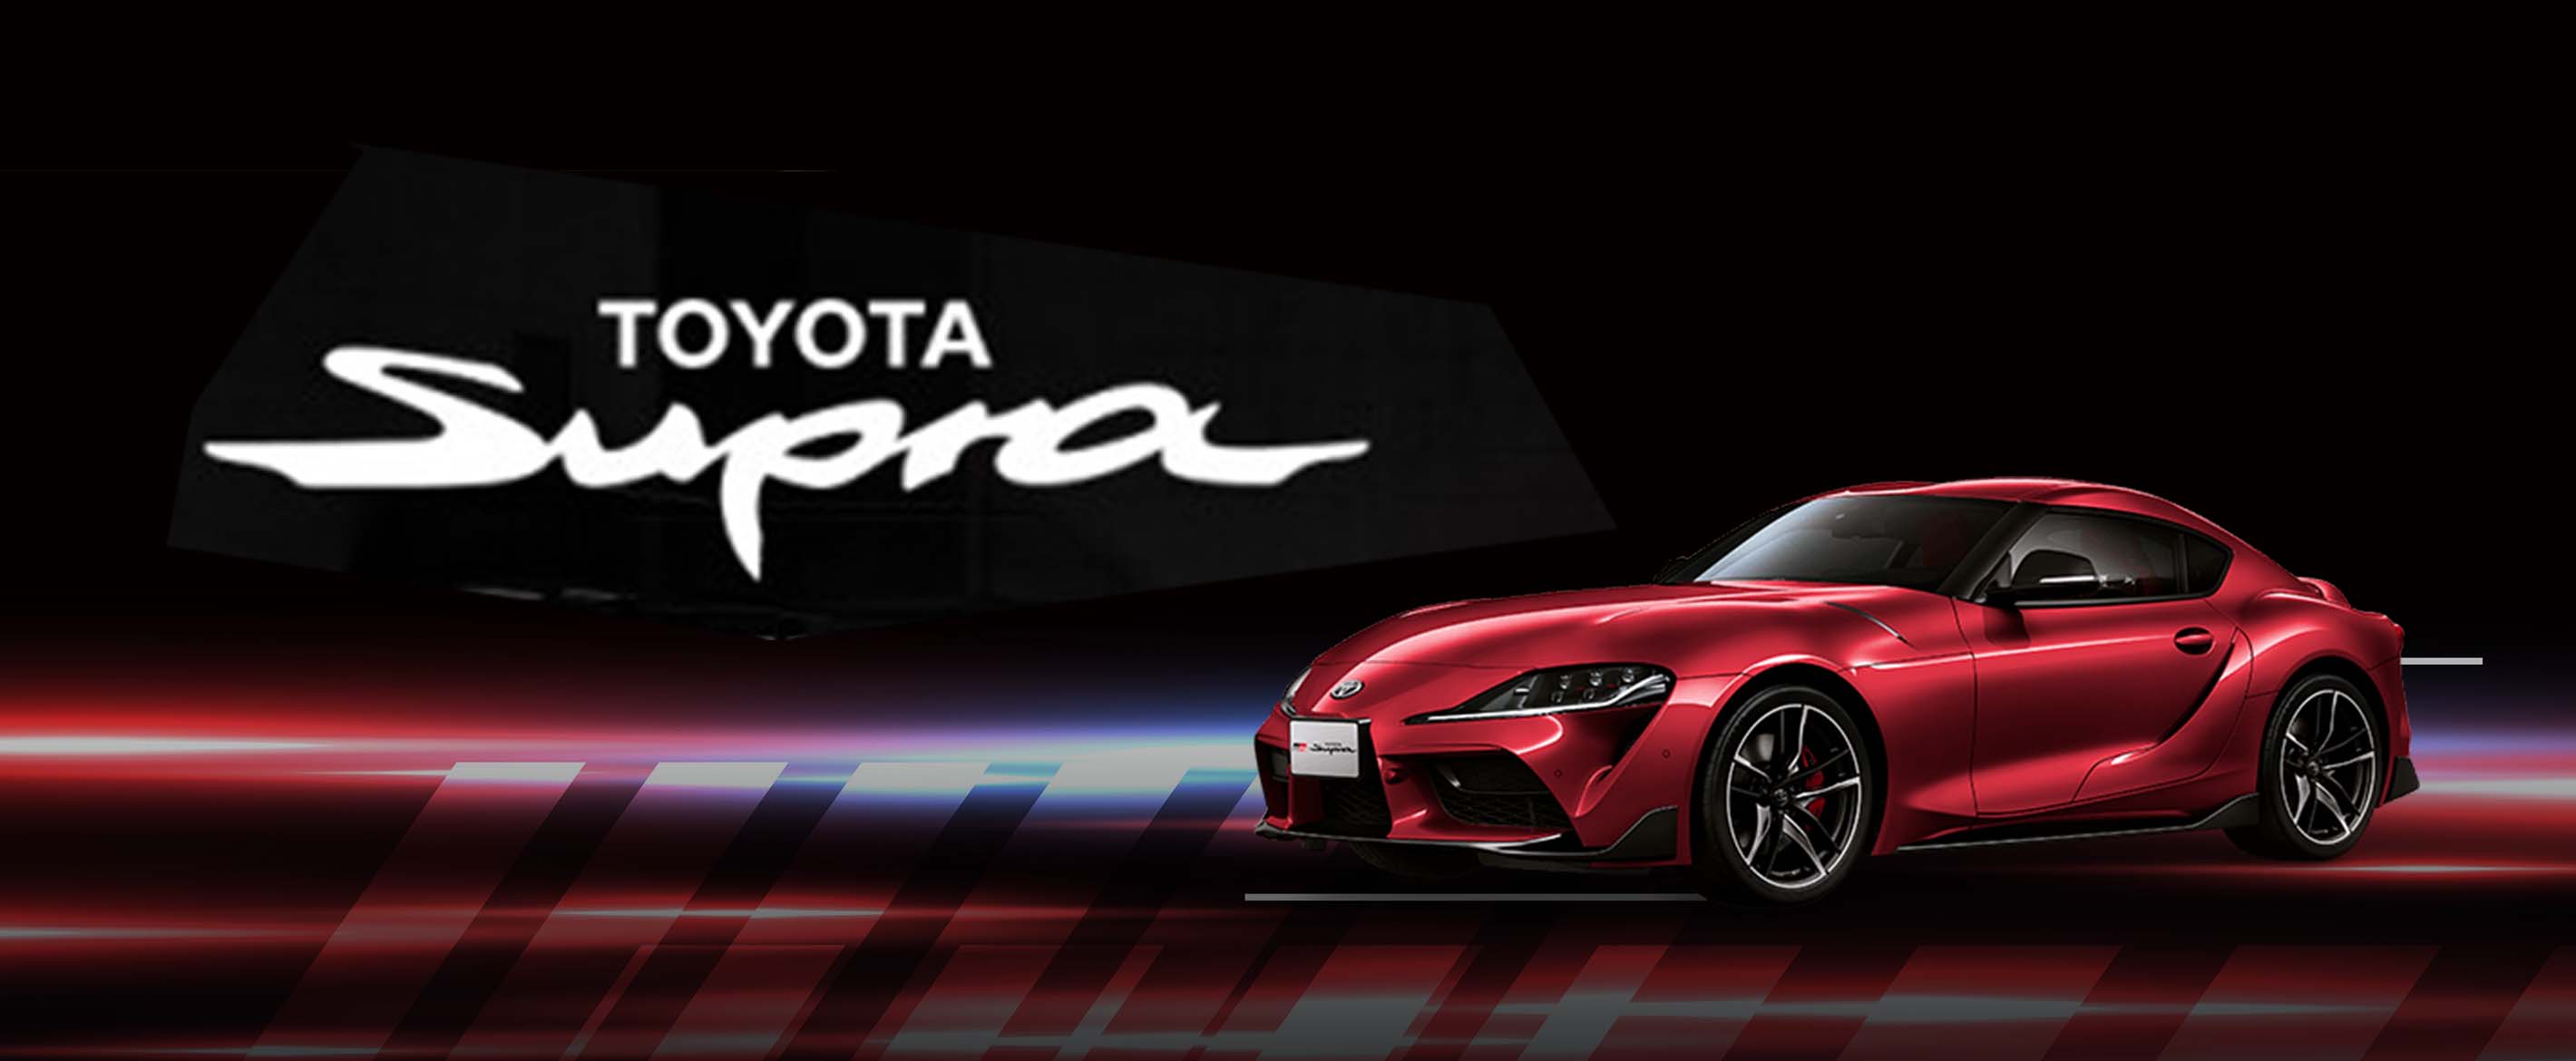 Toyota Supra.jpg